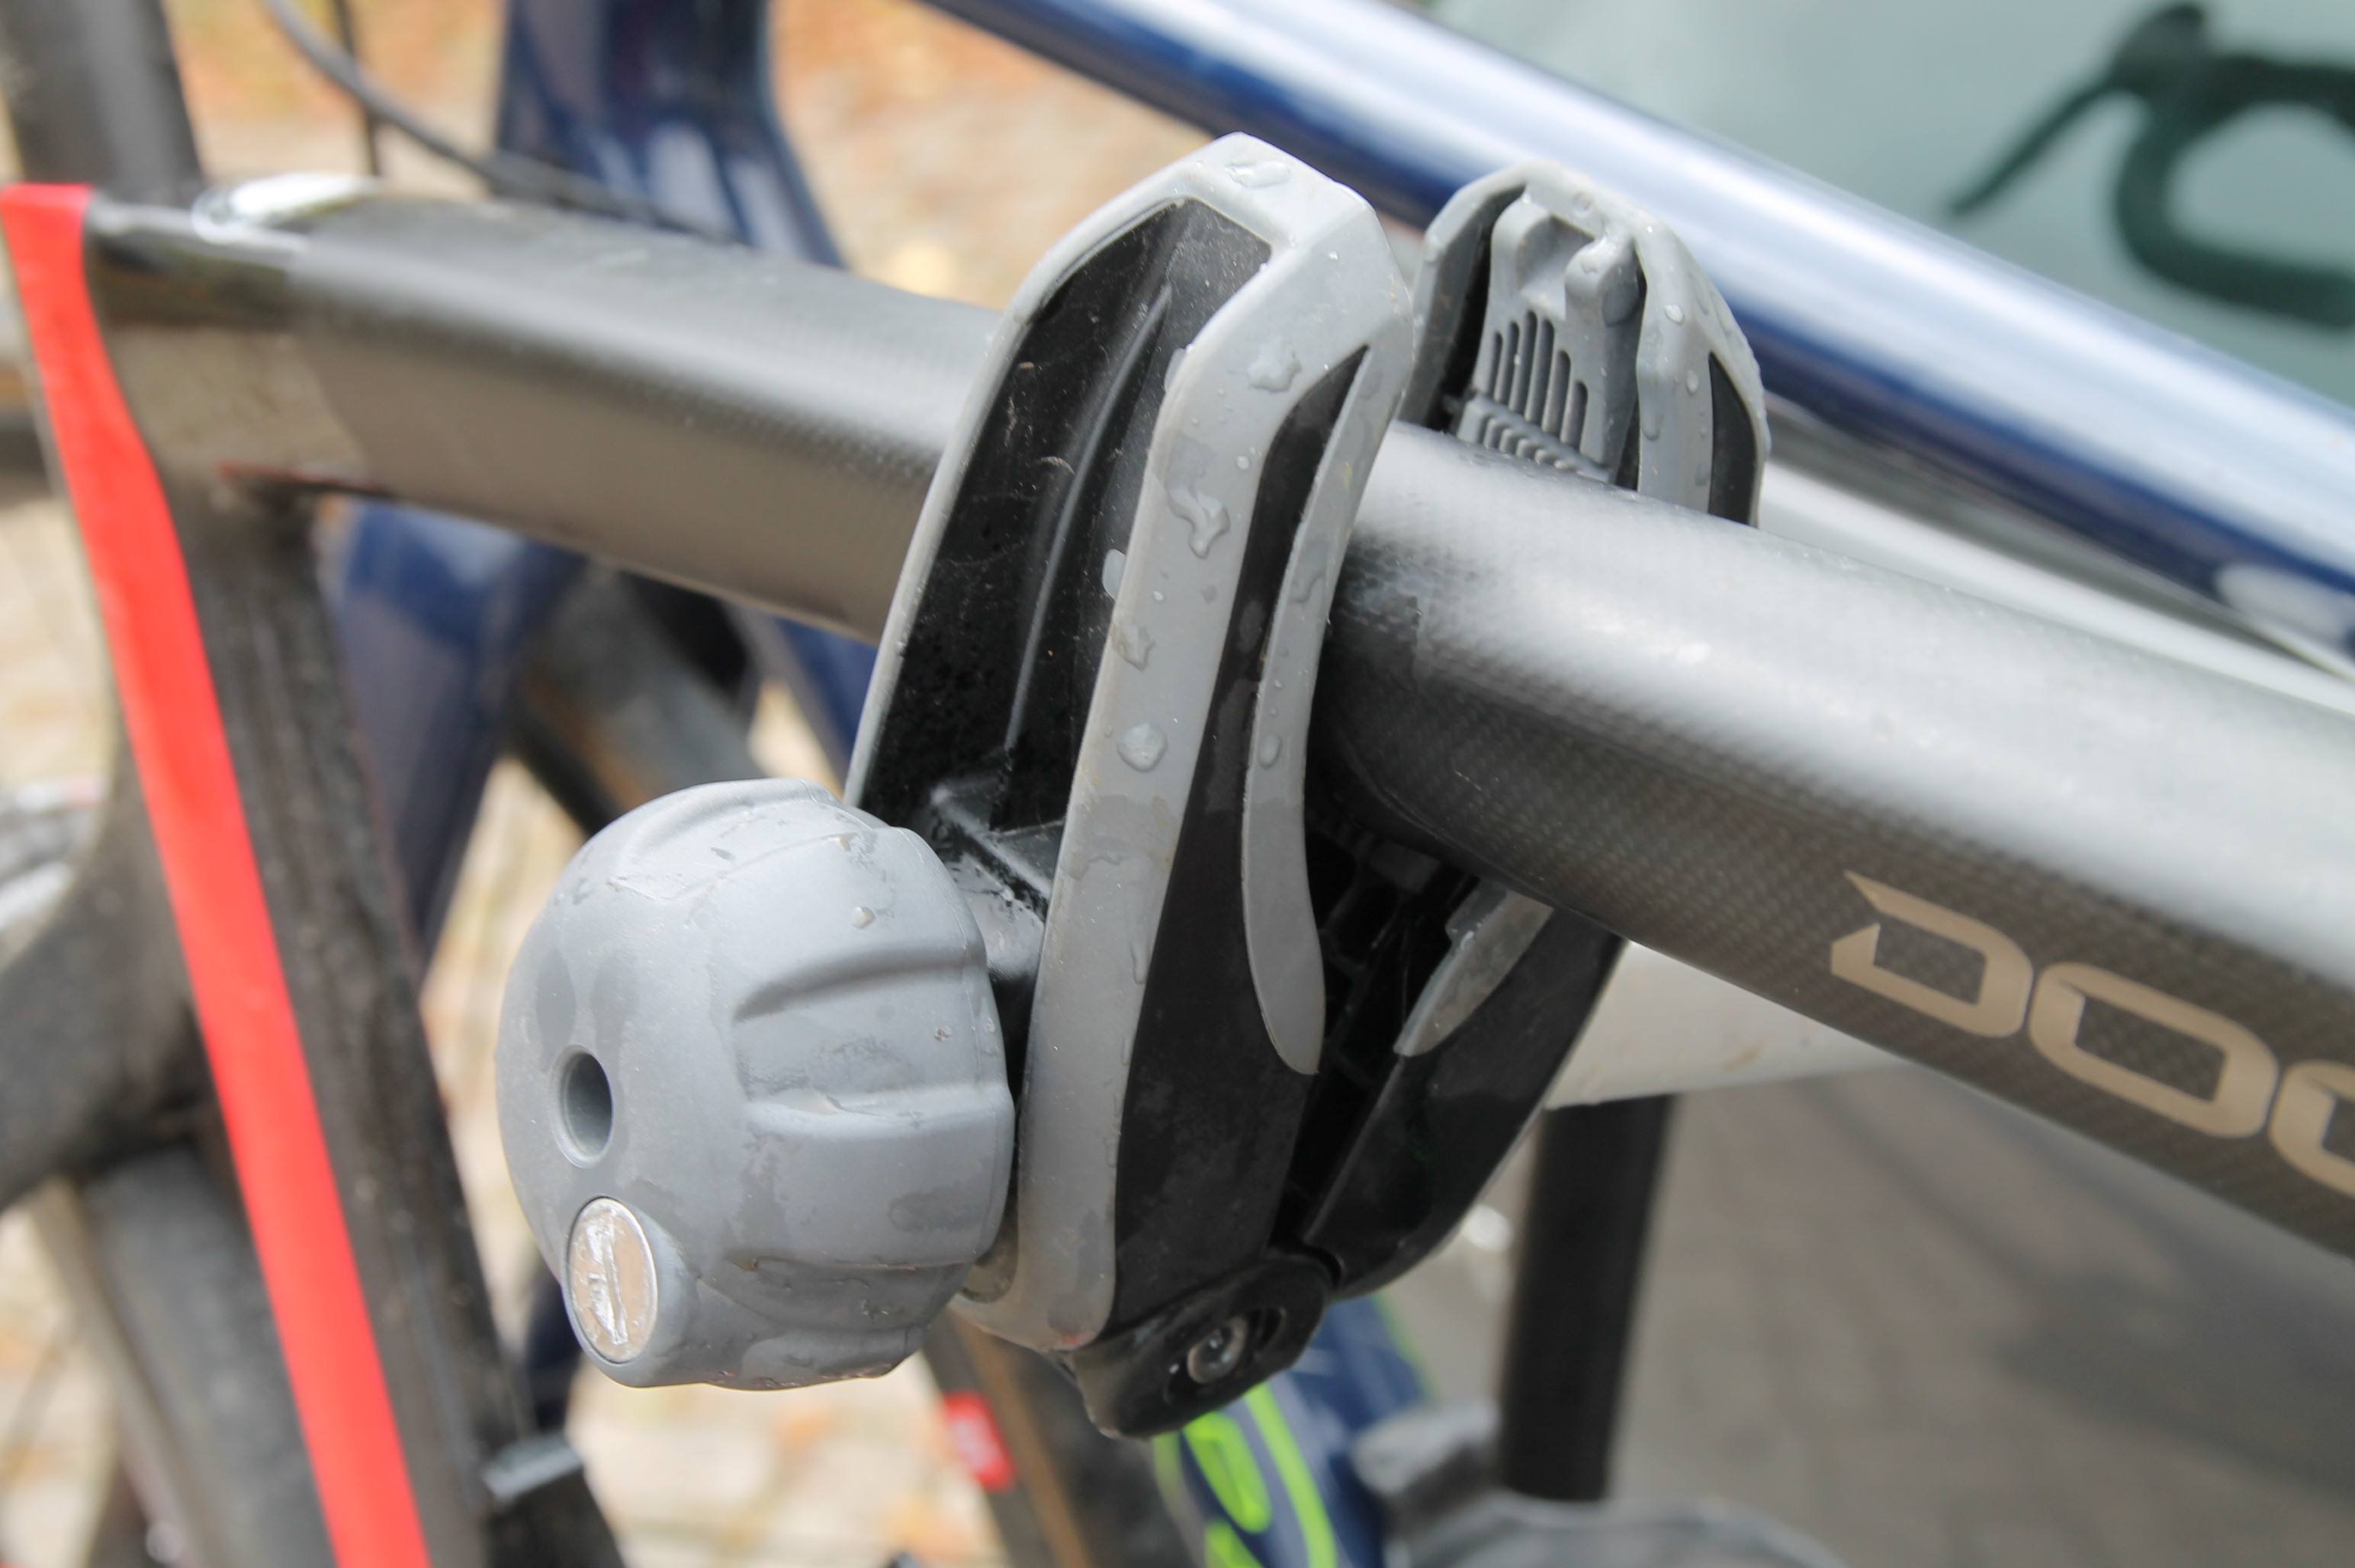 Hesje Booth Beugel Review: Thule VeloCompact 92501 2-bike car rack | road.cc